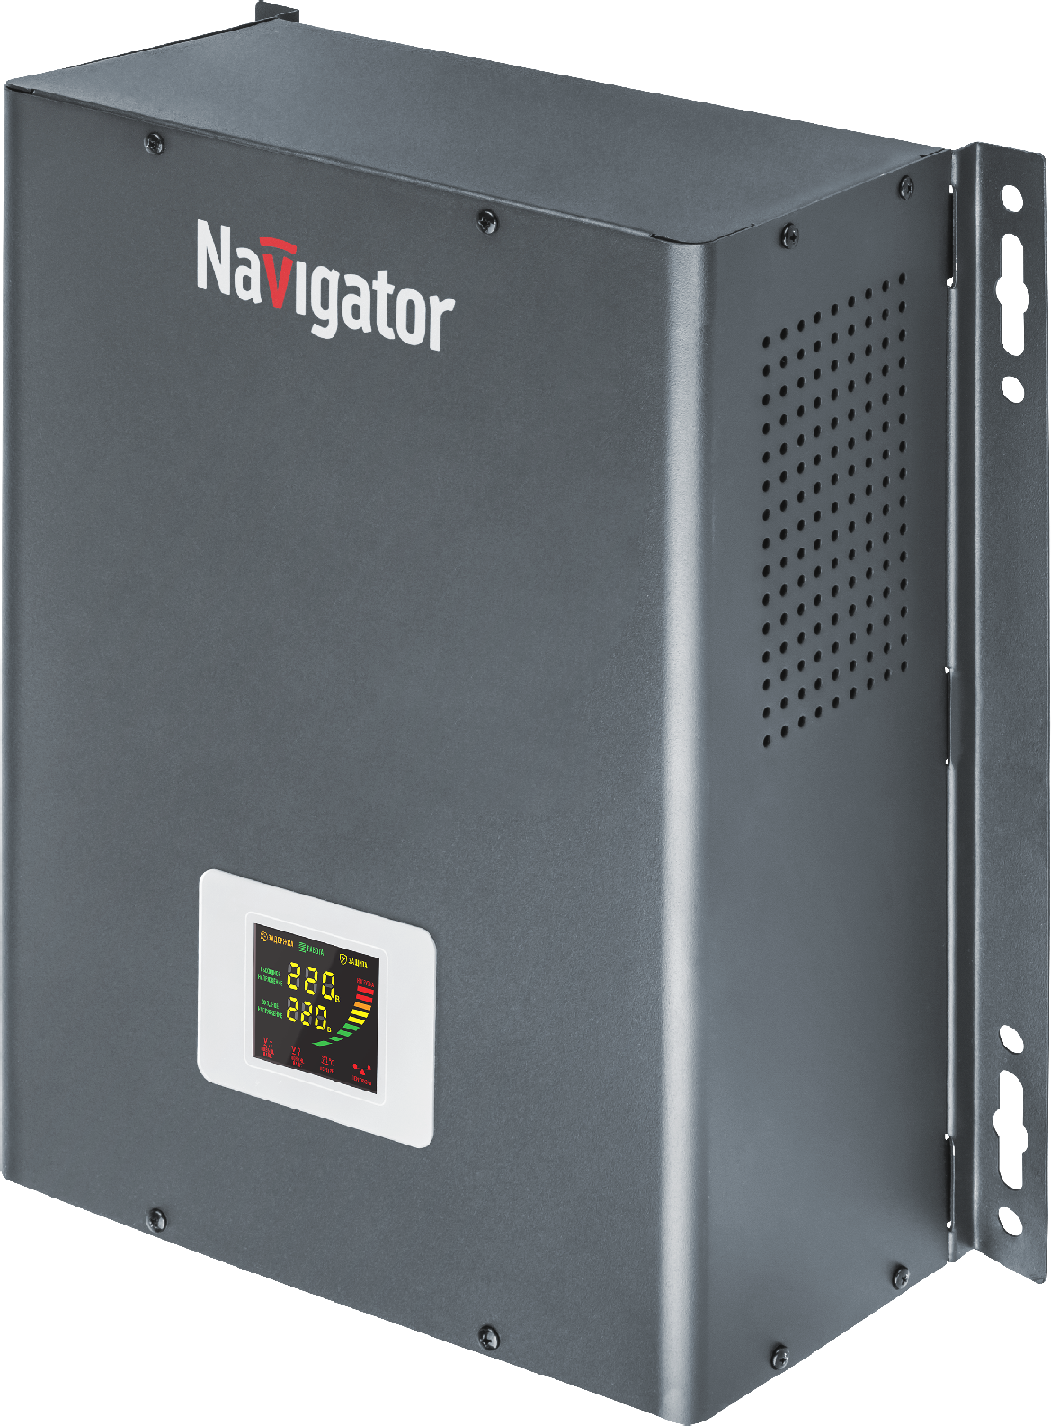 Стабилизатор напряжения настенный Navigator 61 779 NVR-RW1-5000, 5000ВА стабилизатор сетевого напряжения rapan st 5000 5000ва uвх 100 260 в